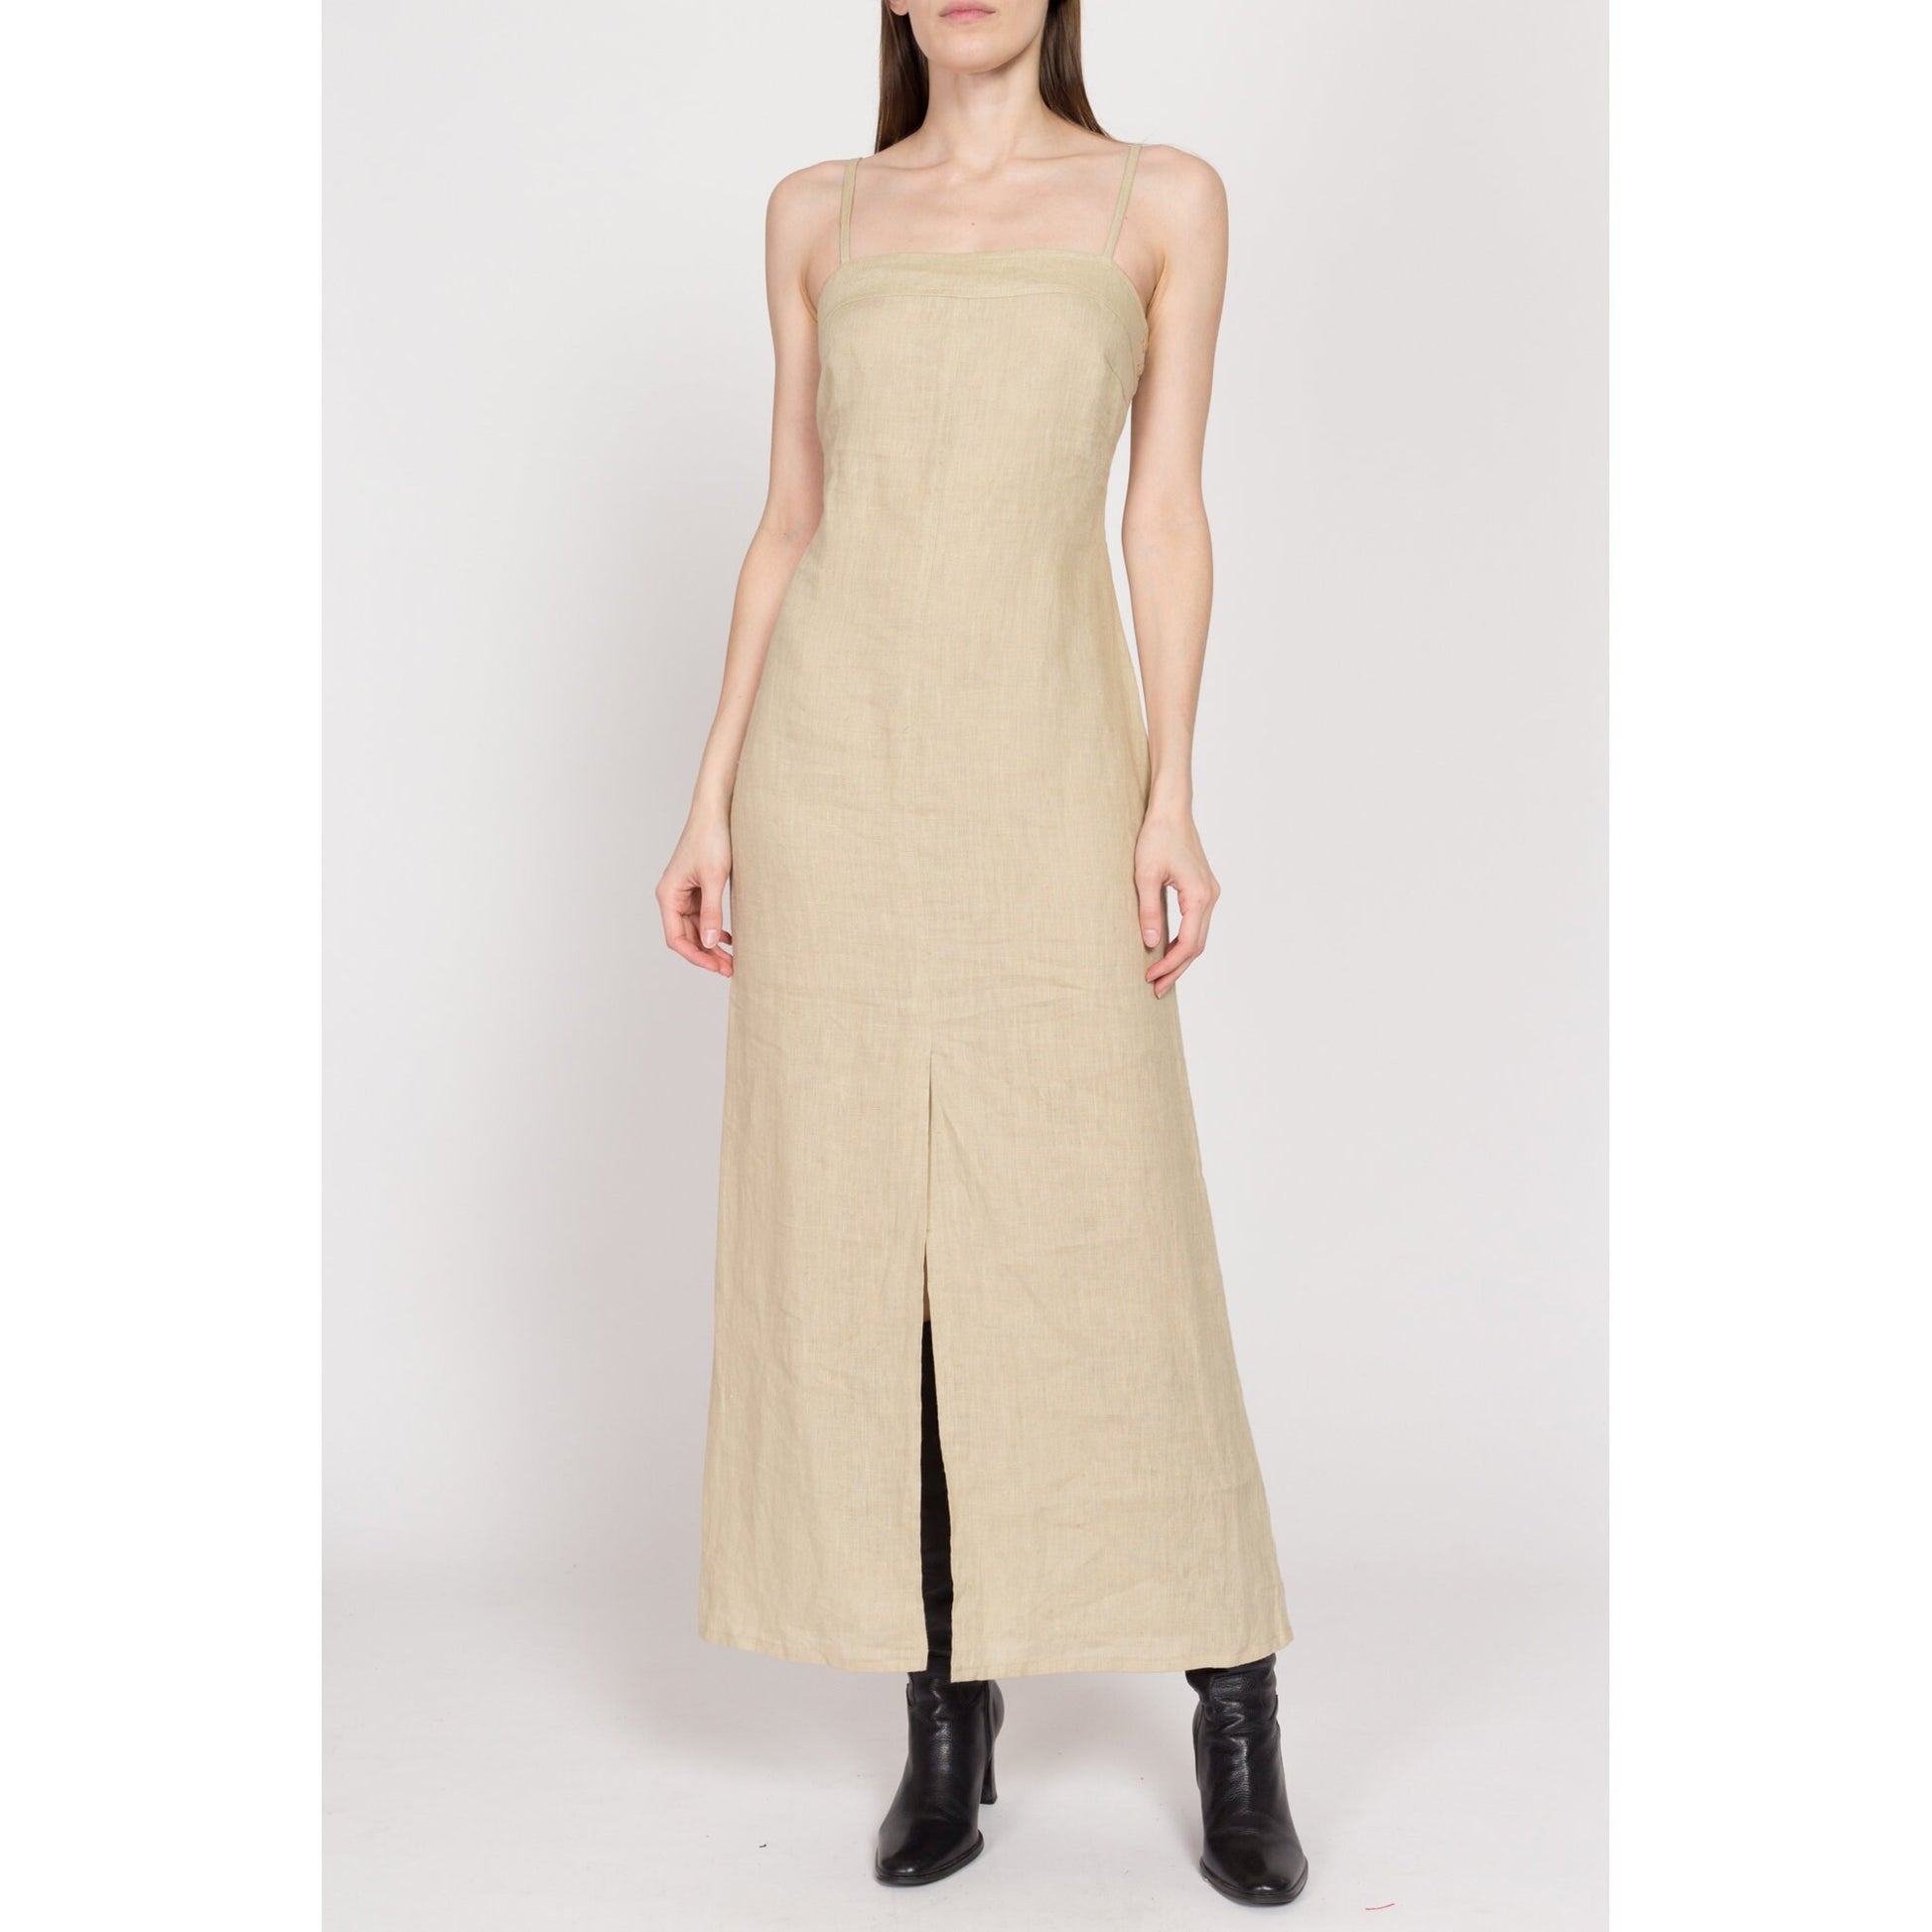 XS 90s Oatmeal Linen Backless Maxi Dress | Vintage Minimalist Sleeveless Low Back Keyhole Sundress